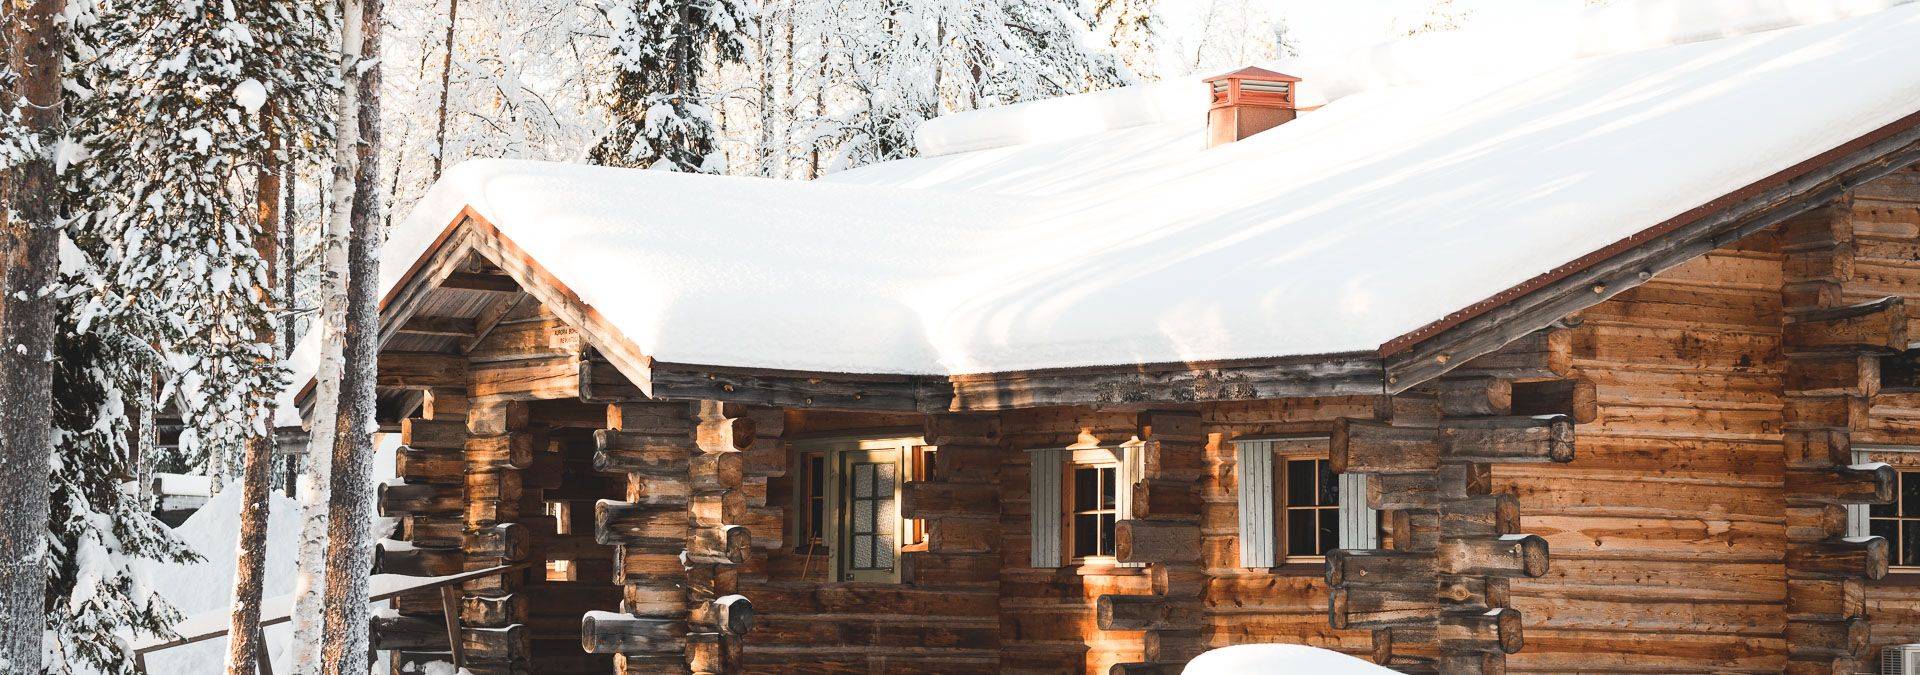 Main Building And External   Credit Arctic Circle Wilderness Lodge (1)